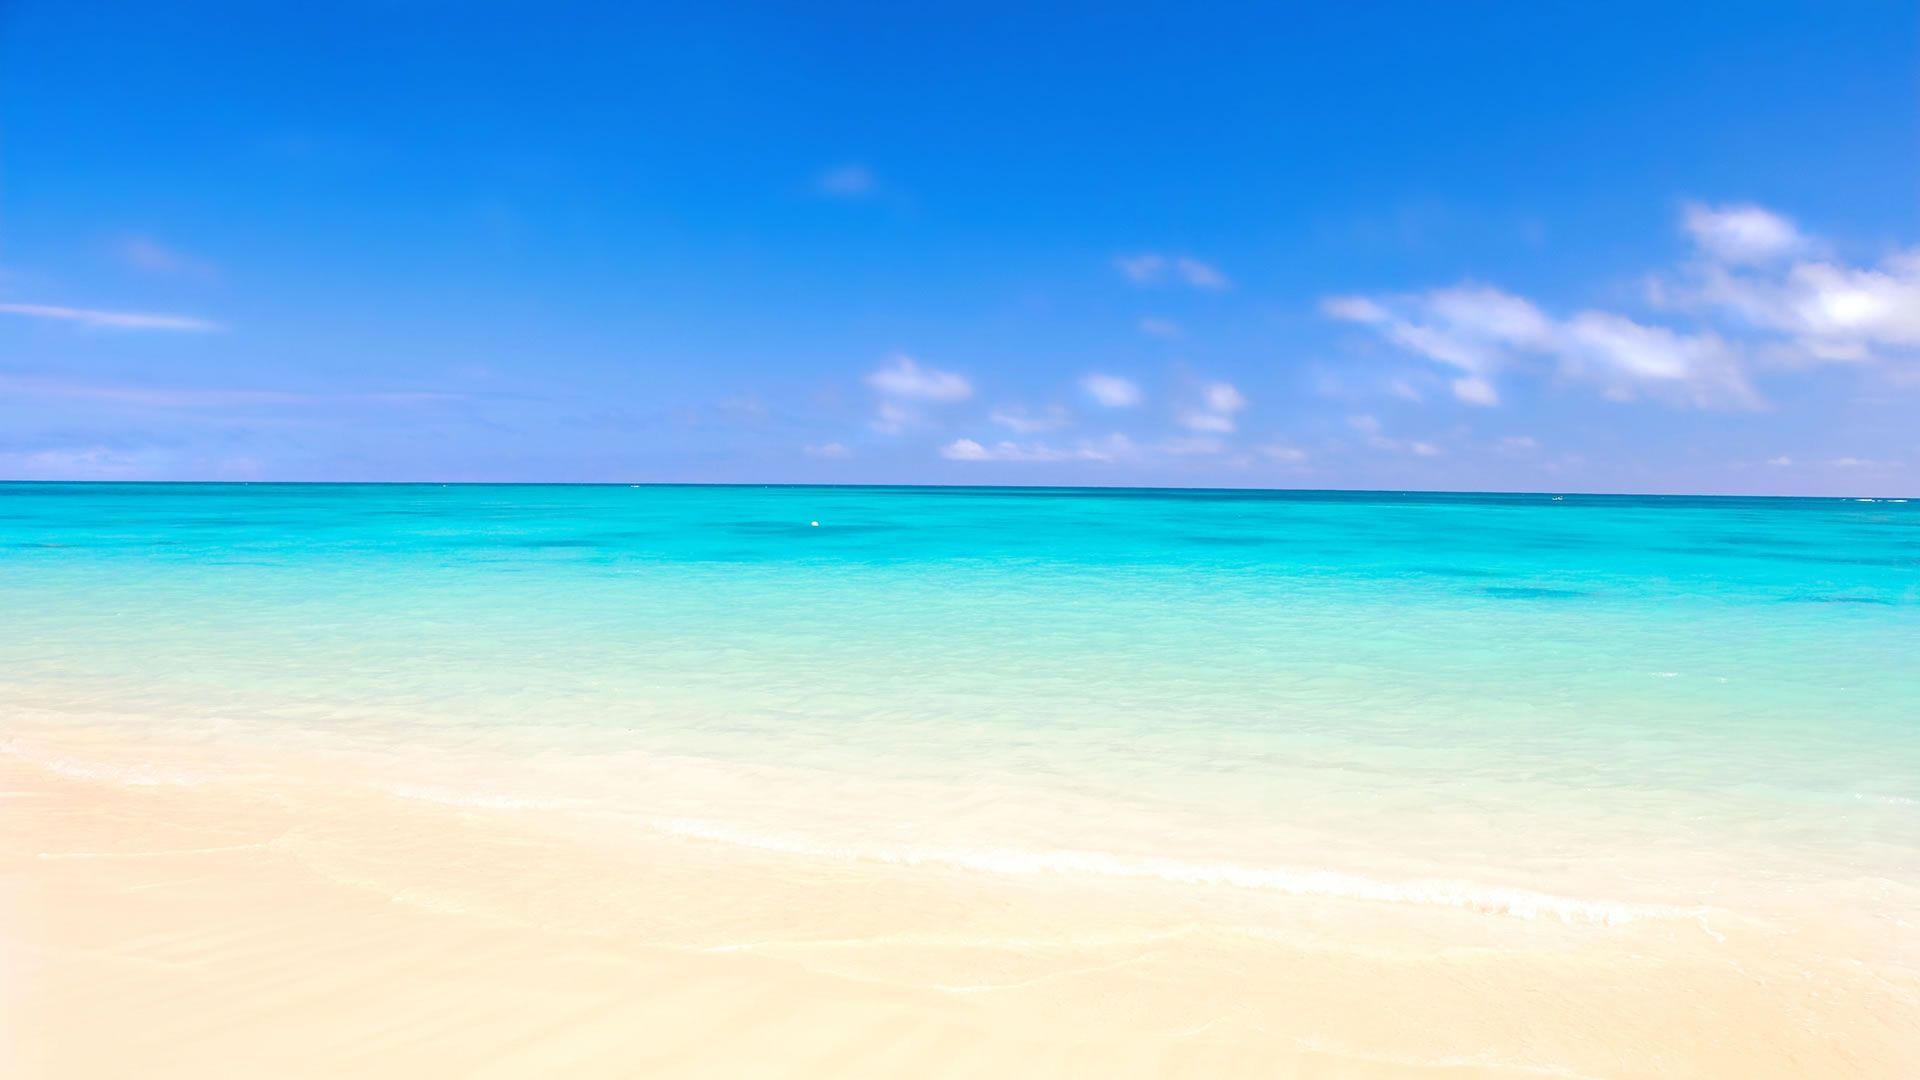 Fondos de pantalla de playas del caribe - FondosMil